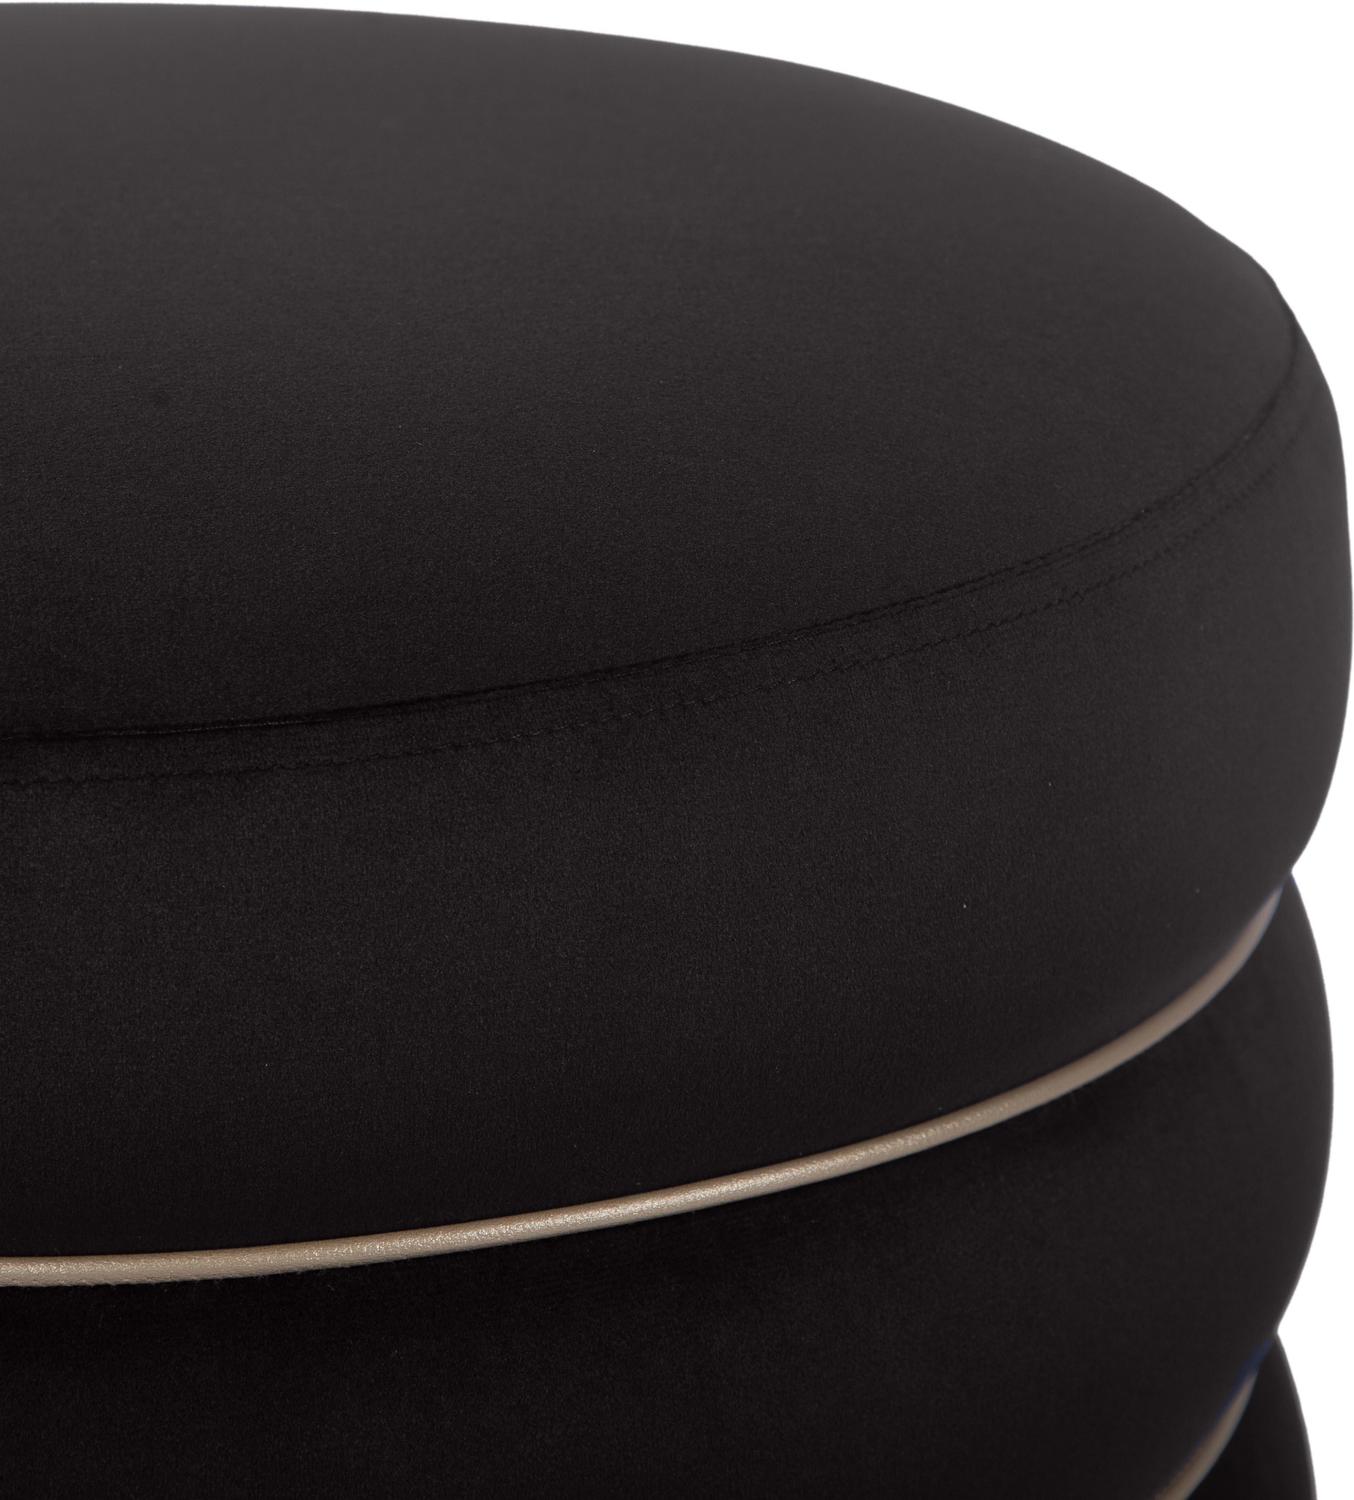 unique upholstered chair Tov Furniture Ottomans Black